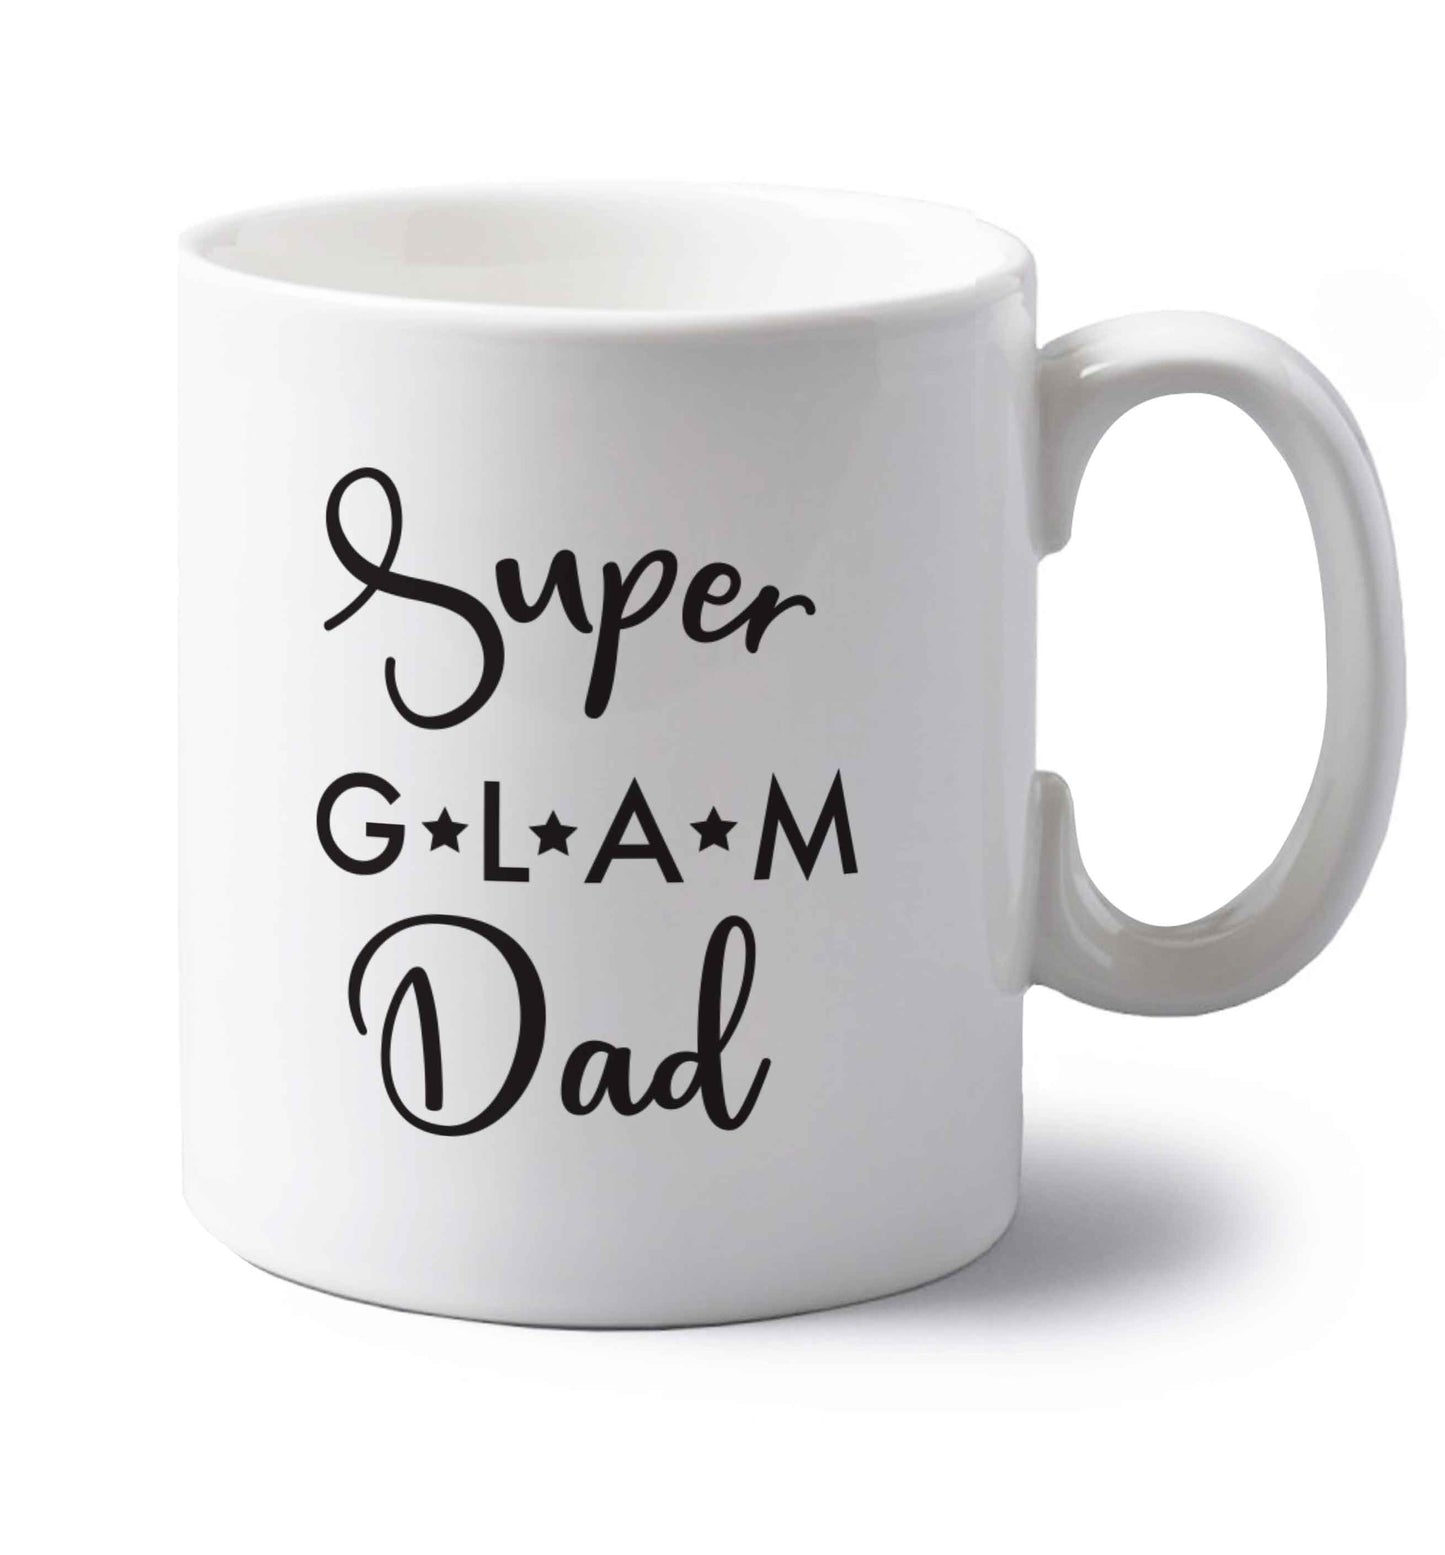 Super glam Dad left handed white ceramic mug 